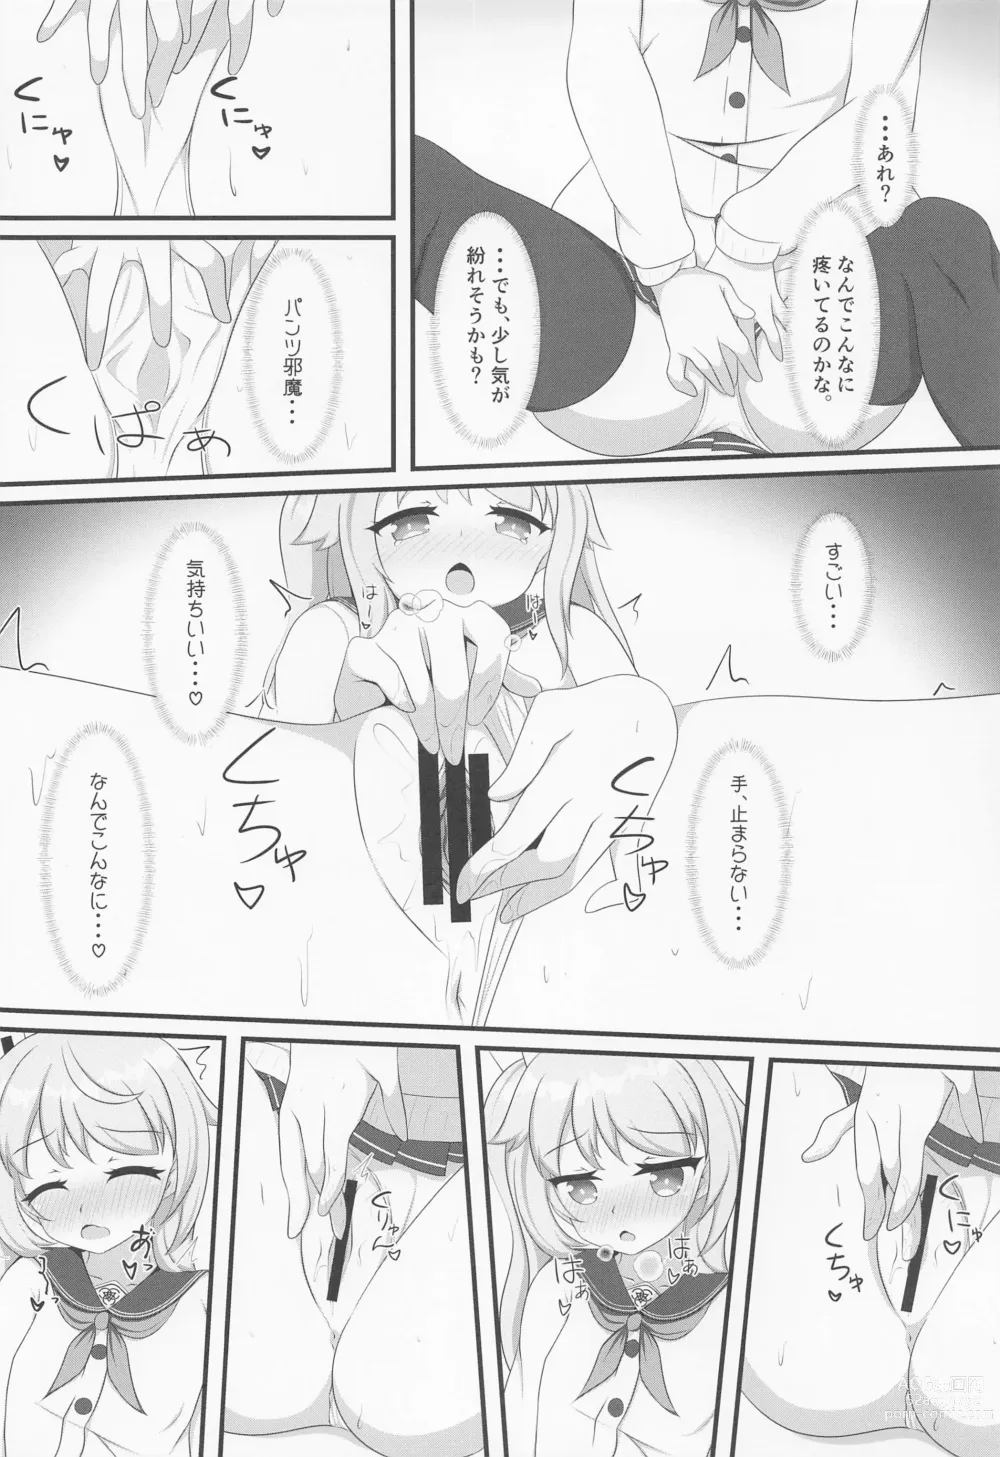 Page 9 of doujinshi Kenren to Aiyoku no Affogato